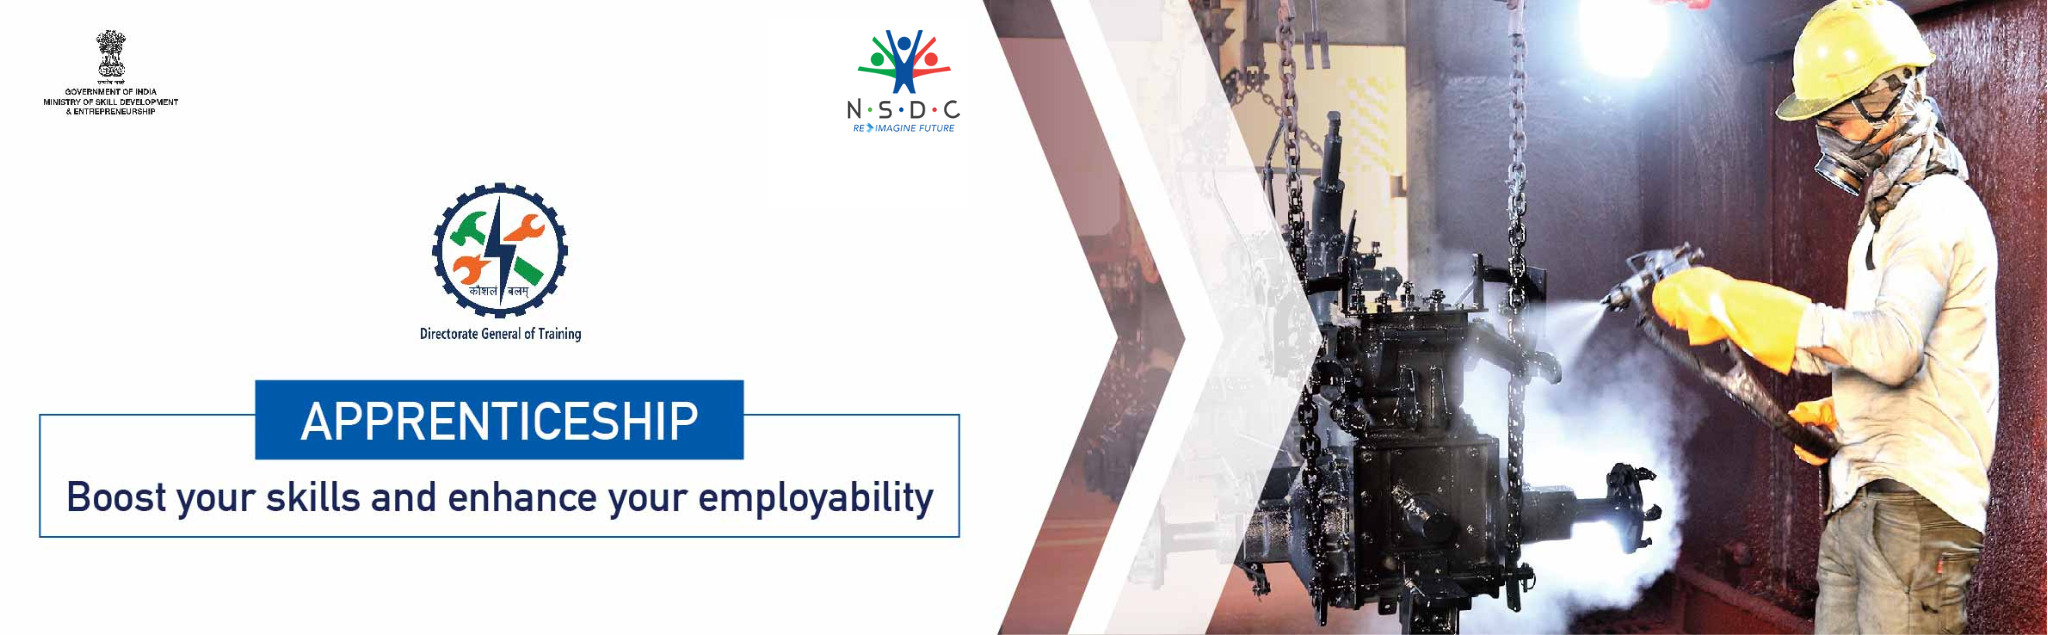 राष्ट्रीय अप्रेन्टिस प्रोत्साहन योजना: आगे बढ़ रहा रोजगार और कौशल विकास